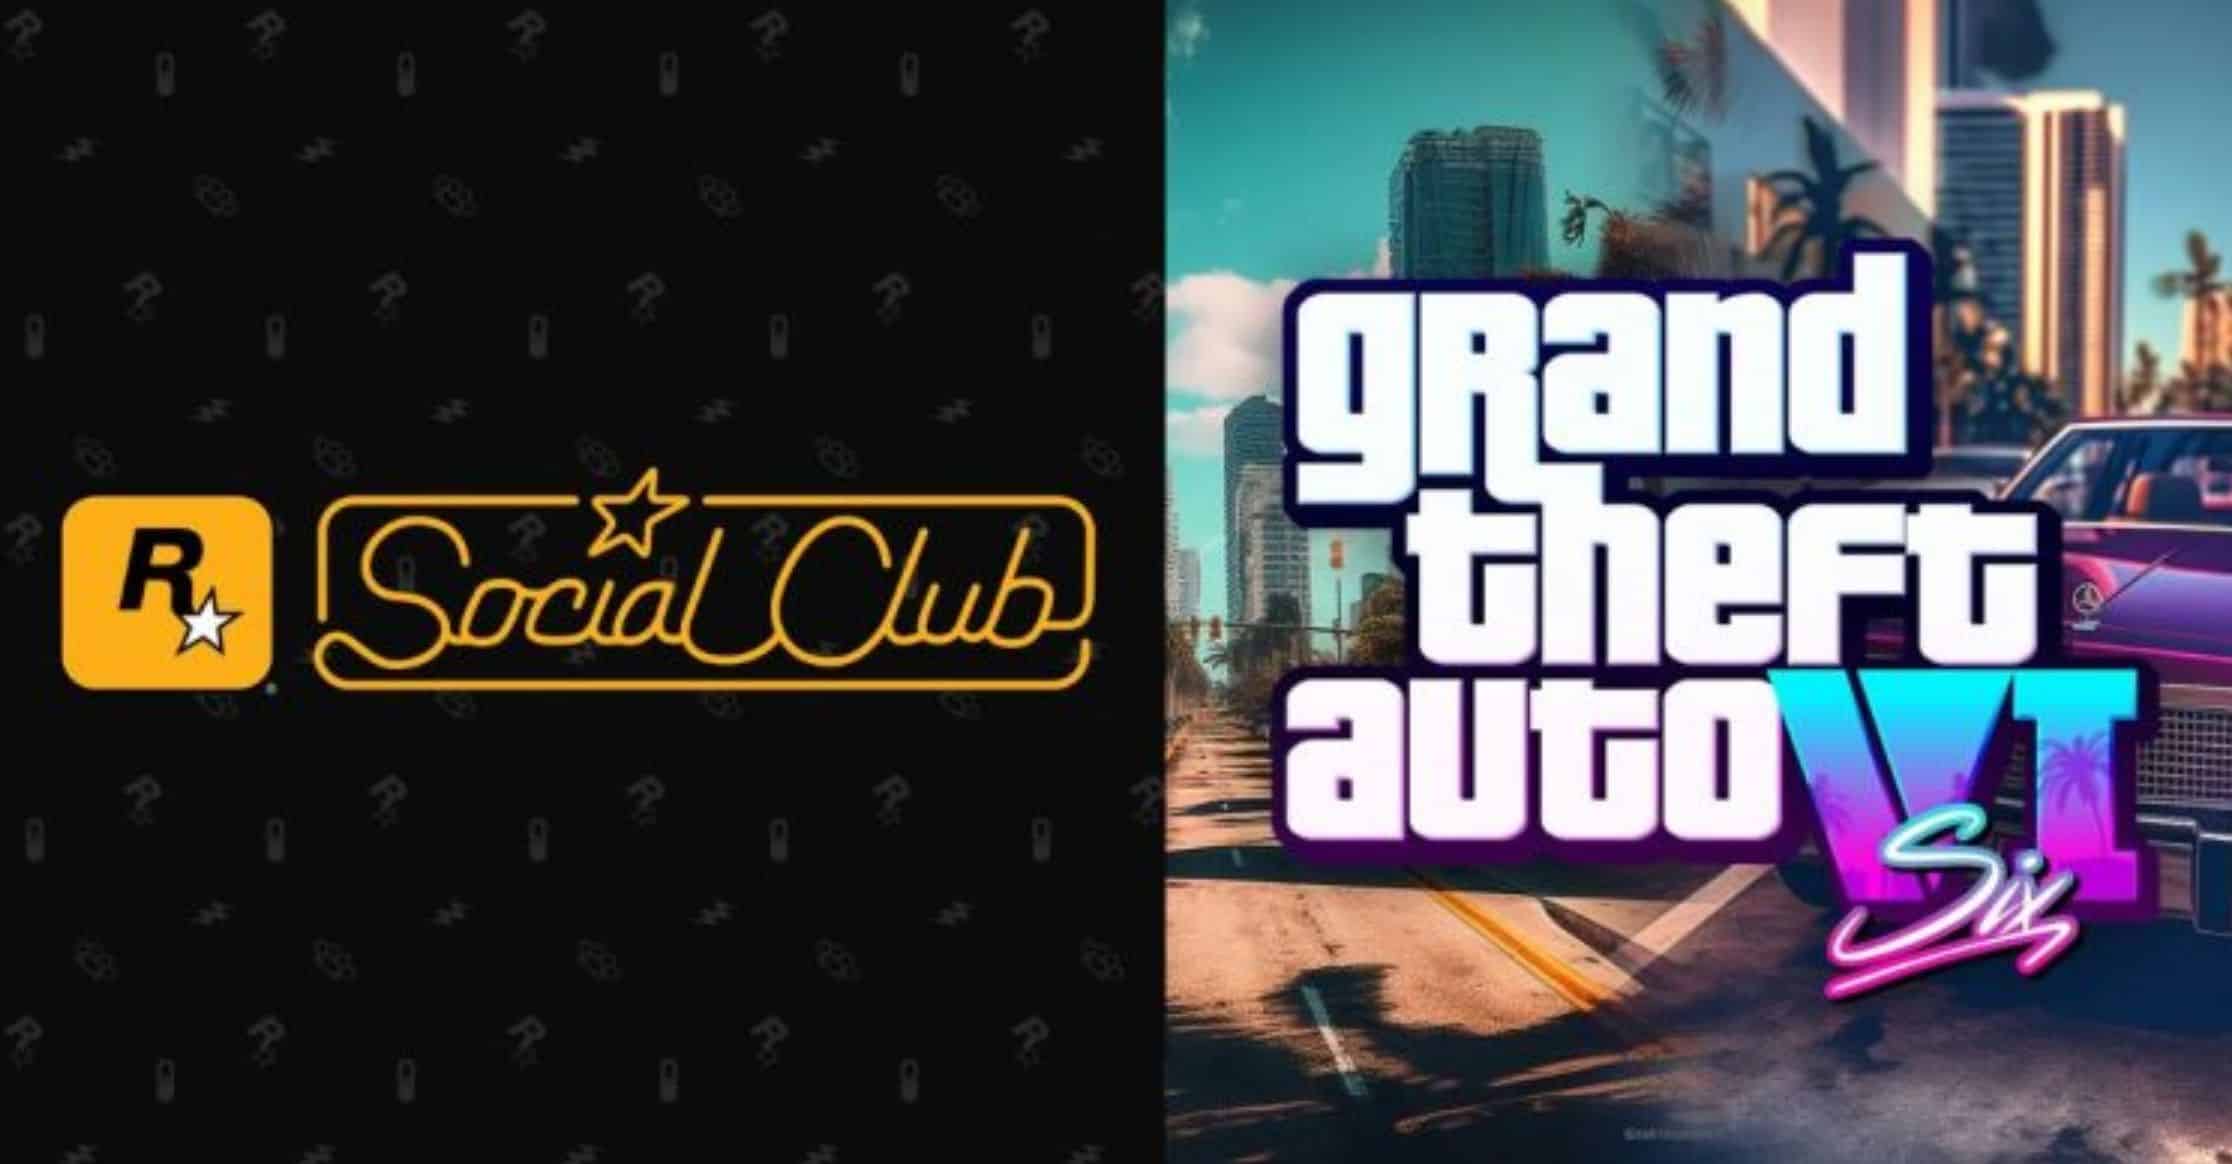 Rockstar is rebranding Social Club to Rockstar Games Platform